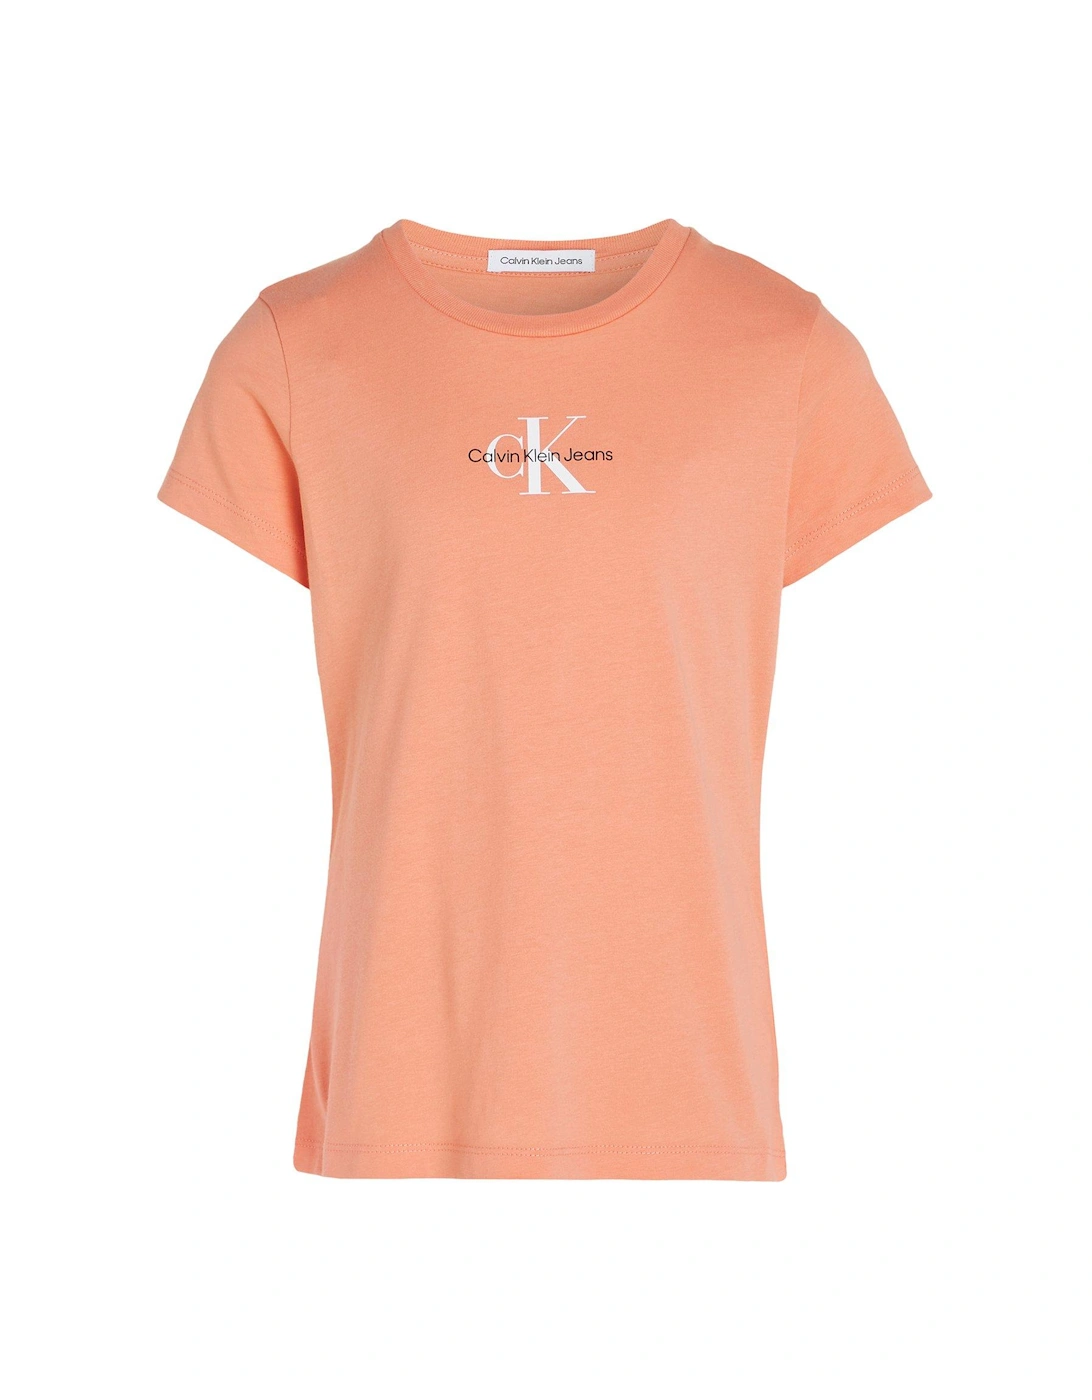 Girls Micro Monogram Short Sleeve T-shirt - Blooming Dahlia - Light Orange, 6 of 5